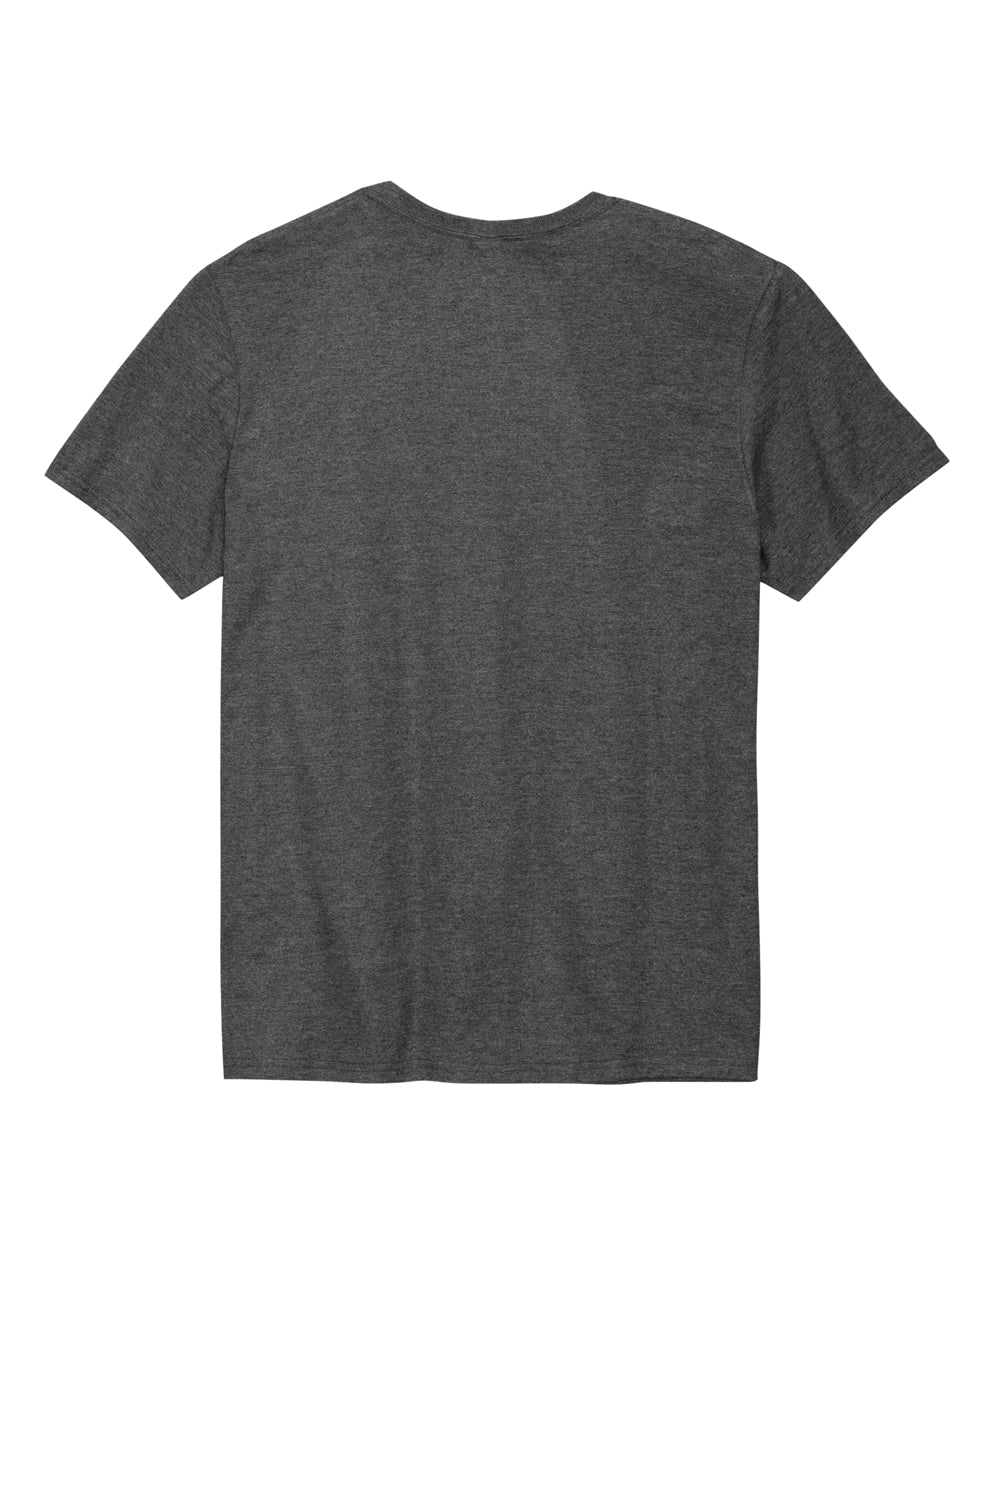 Jerzees 560M Mens Premium Blend Ring Spun Short Sleeve Crewneck T-Shirt Heather Charcoal Grey Flat Back